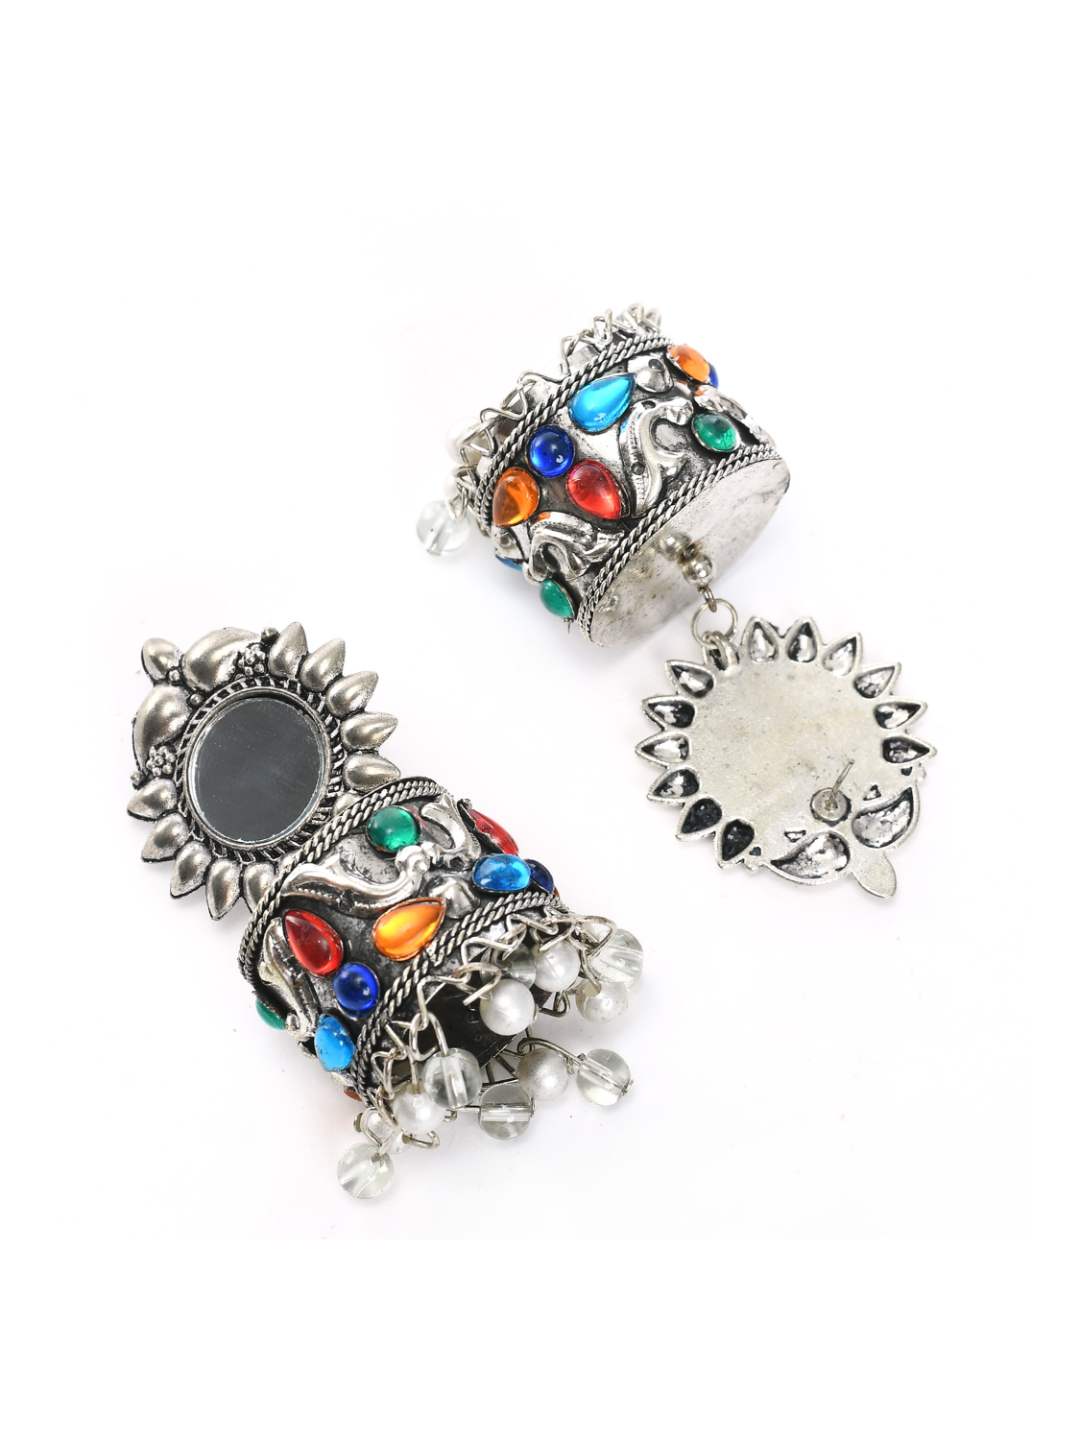 Johar Kamal Silver color Earrings with multi Pearls & mirror work Jhumkas Jker_093